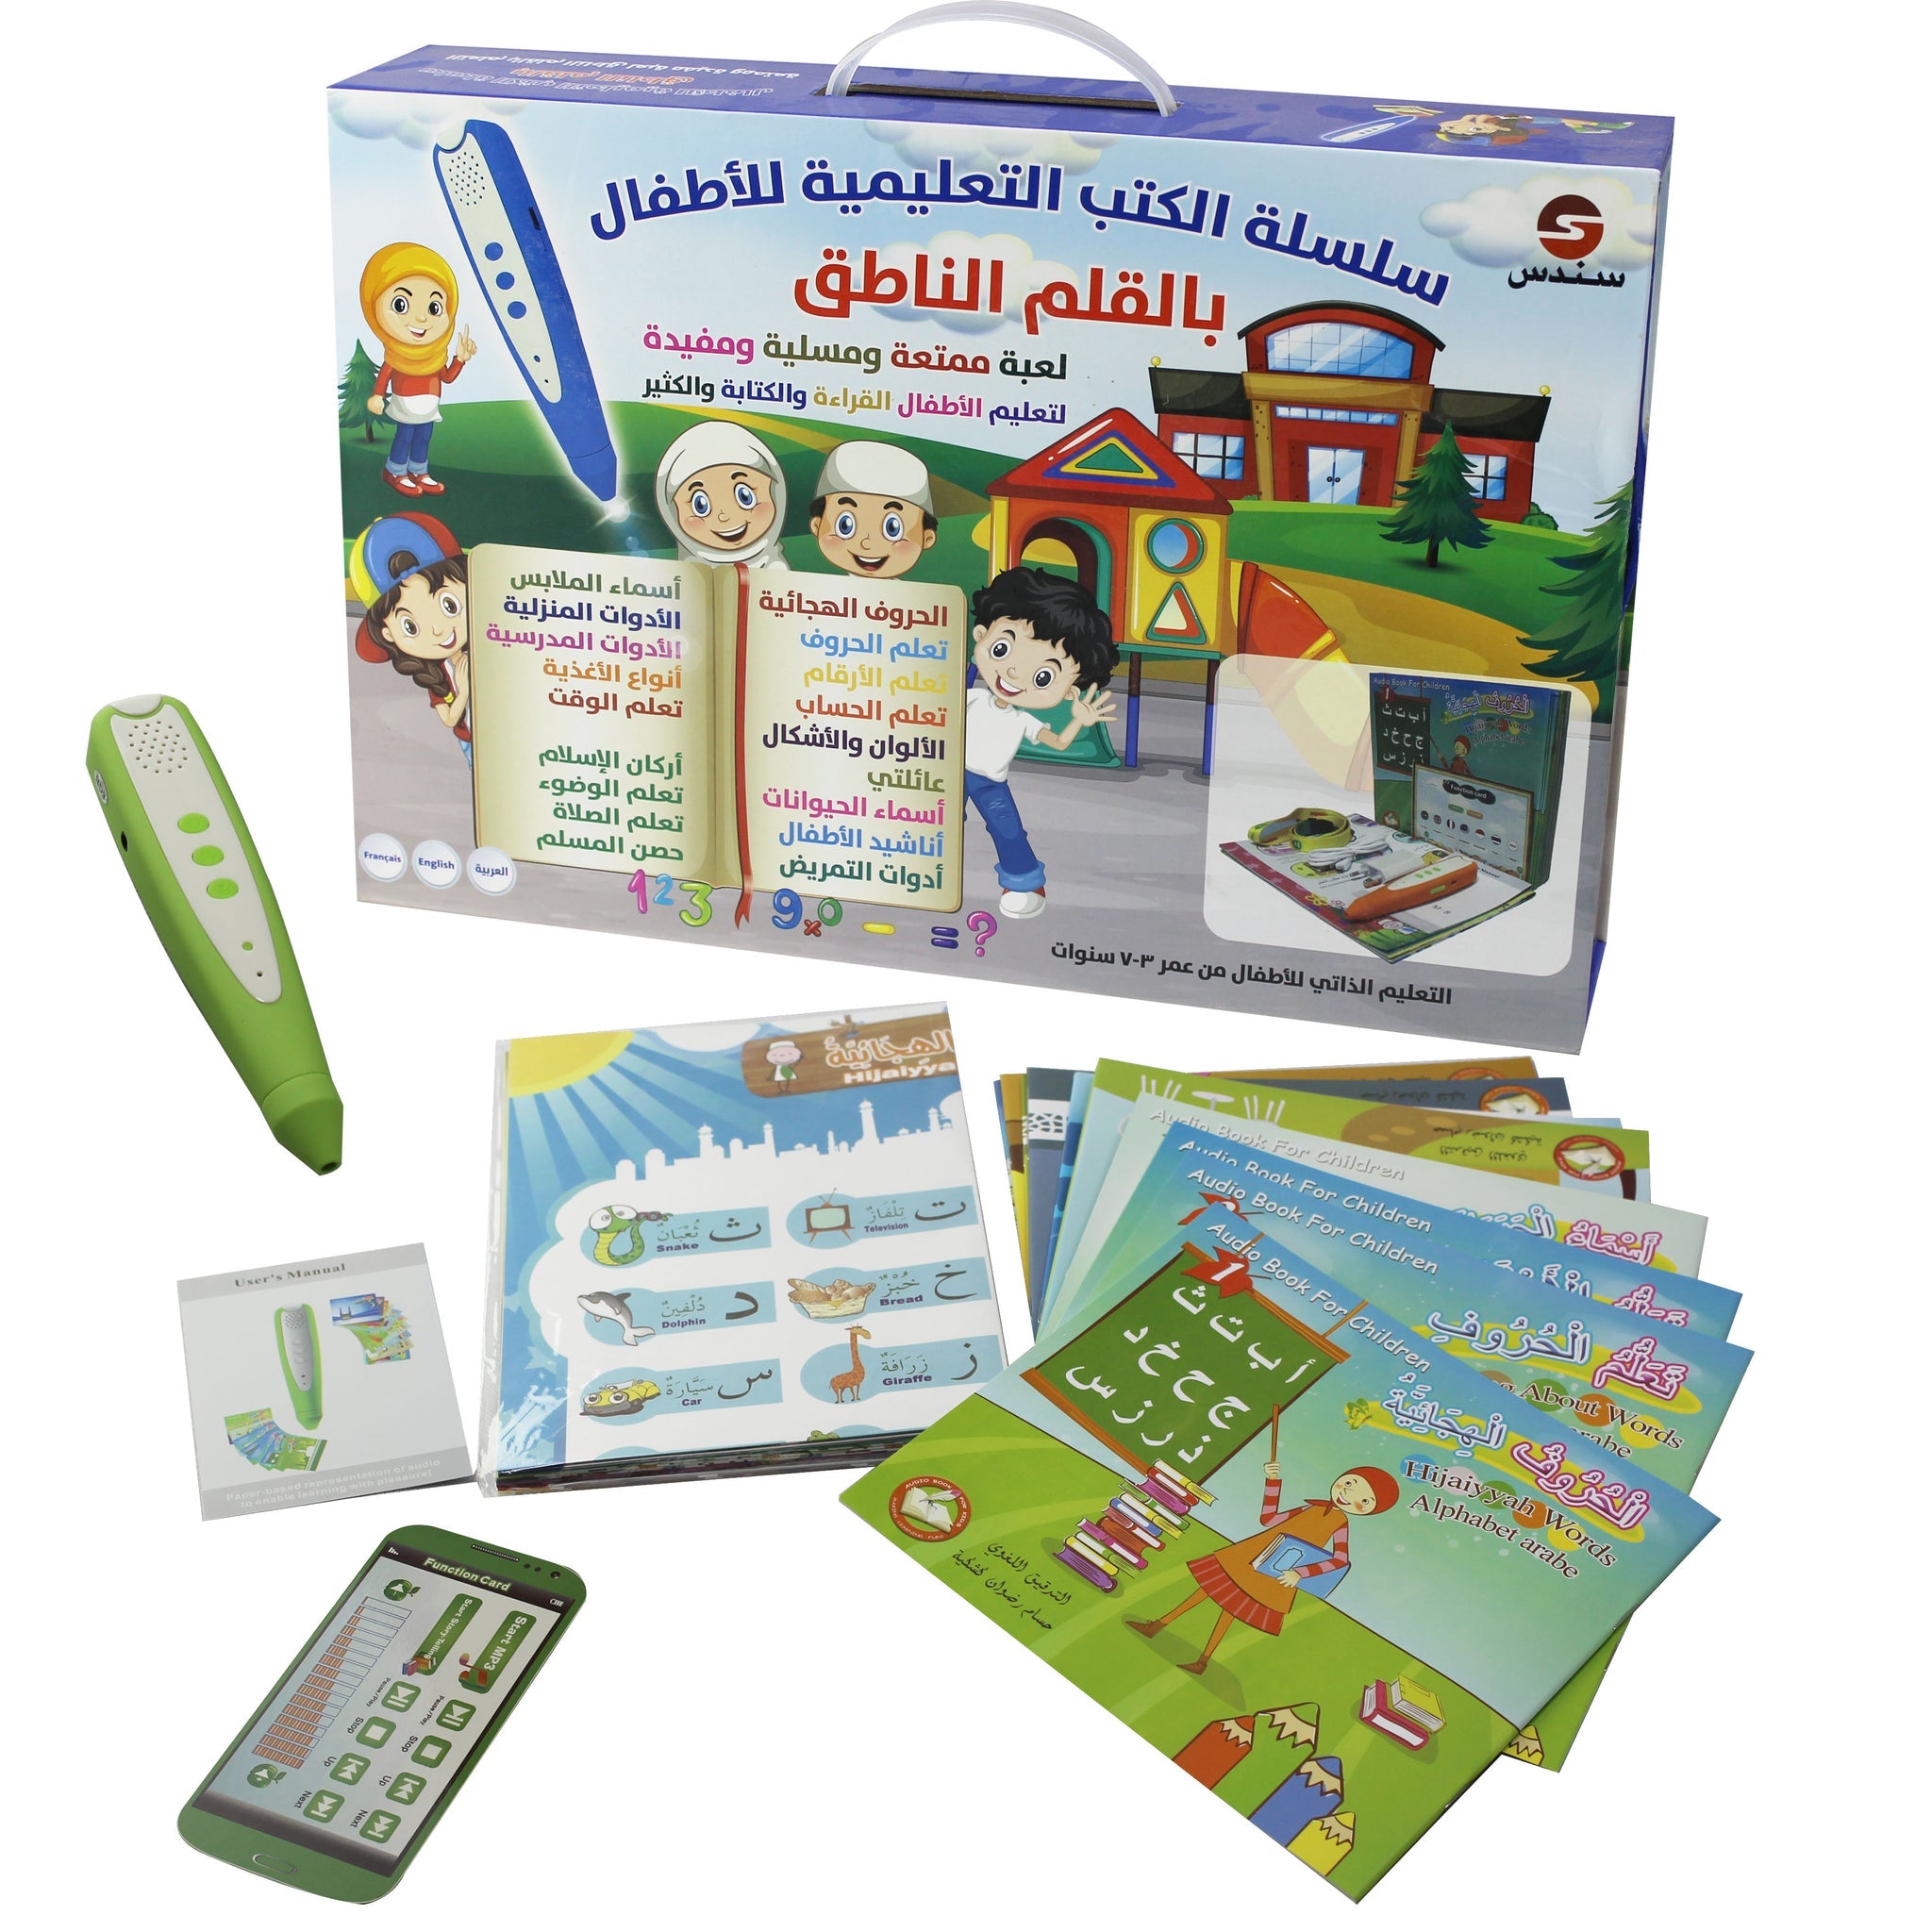 Islamic Audio Book for Children